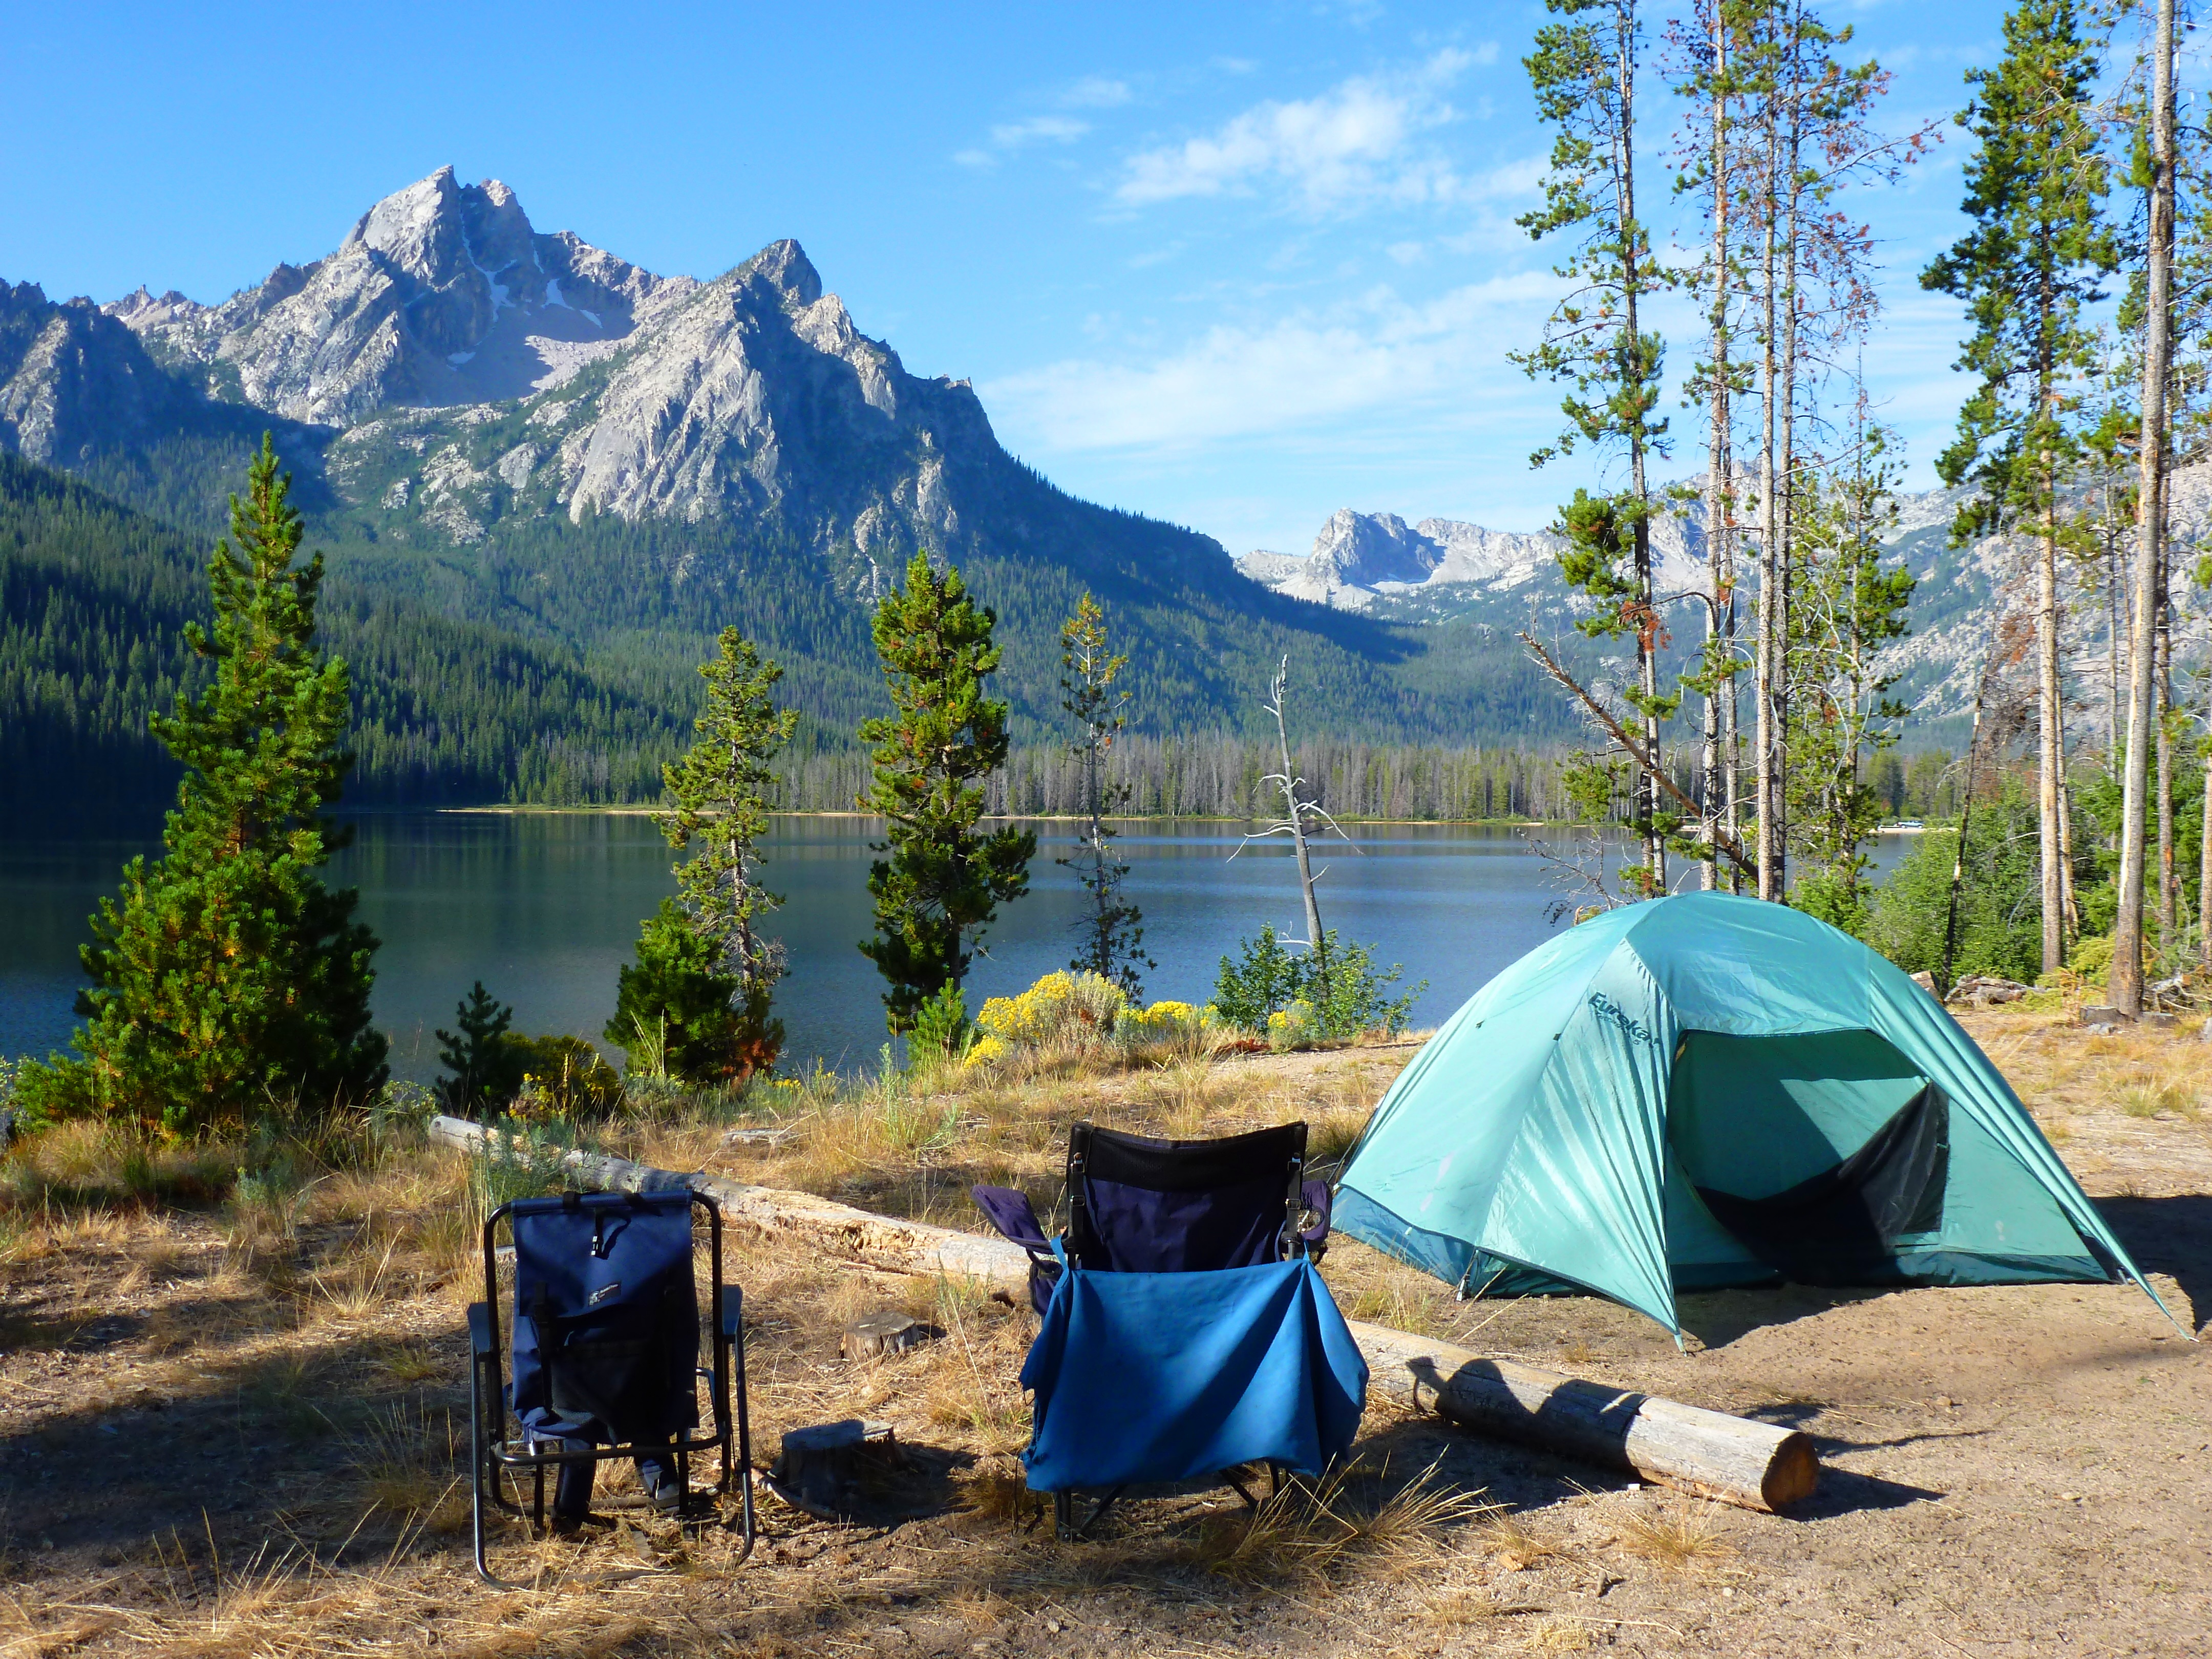 Camping company. Кемпинг в Карелии. Озеро Рица кемпинг у озера. Поход с палатками. Мультинские озера палатки.